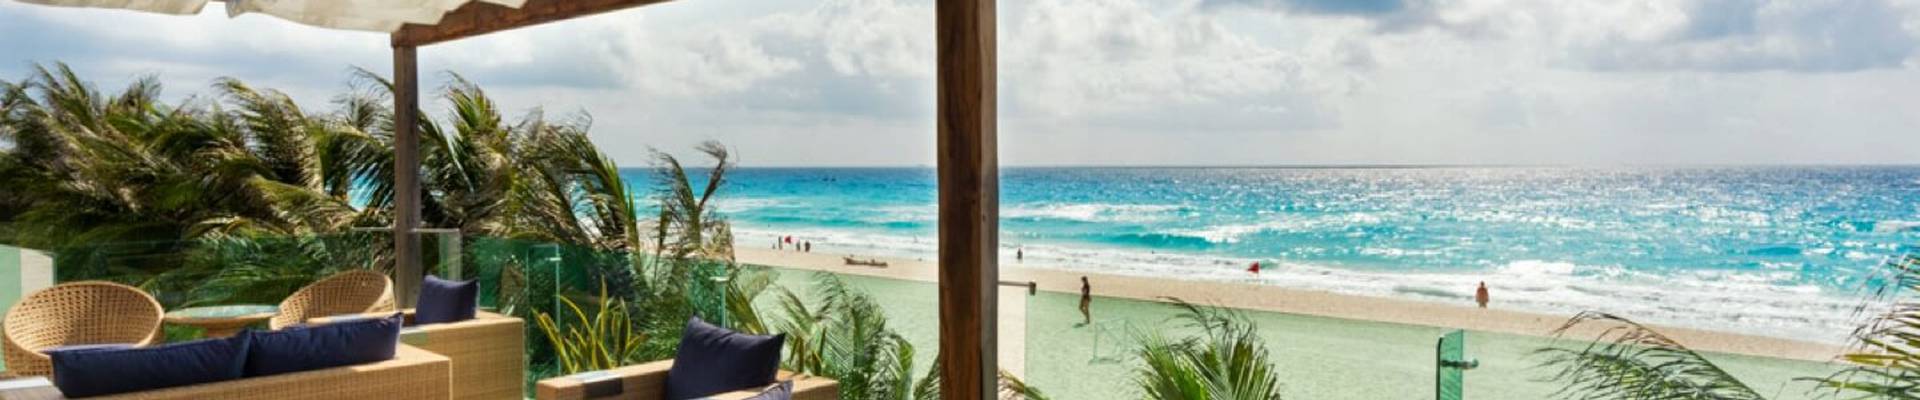 Flamingo Cancun Resort - Cancún - 